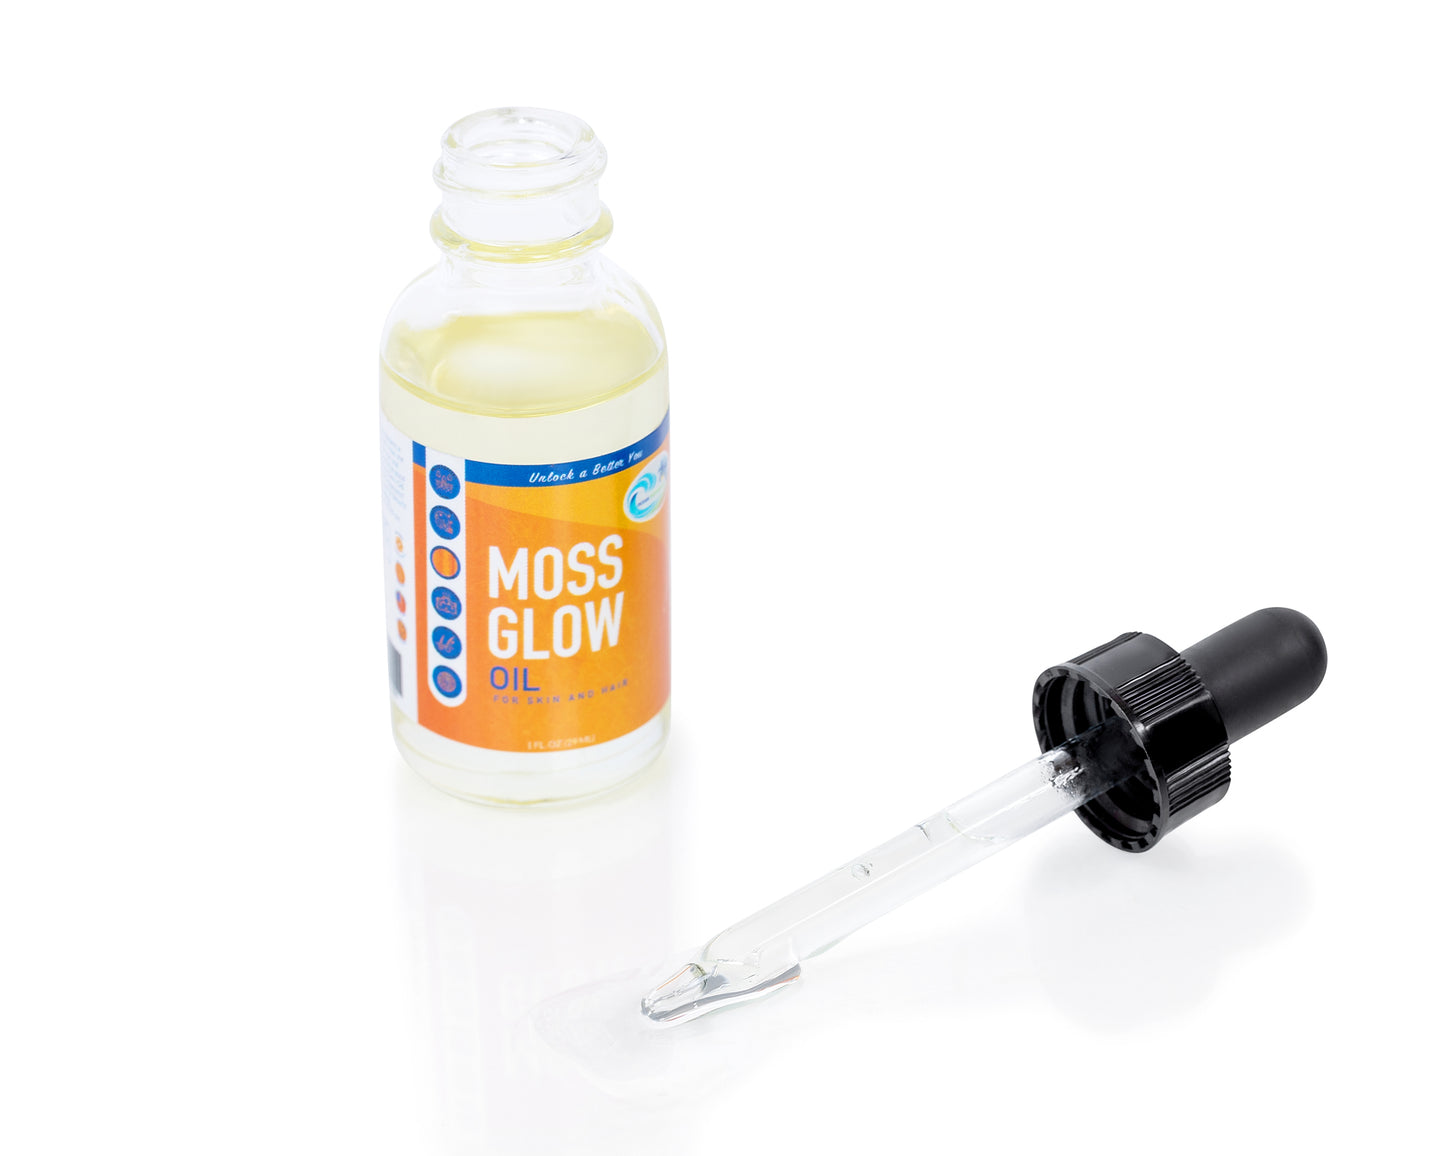 Moss Glow Oil For Hair & Skin - Ocean Botanicals